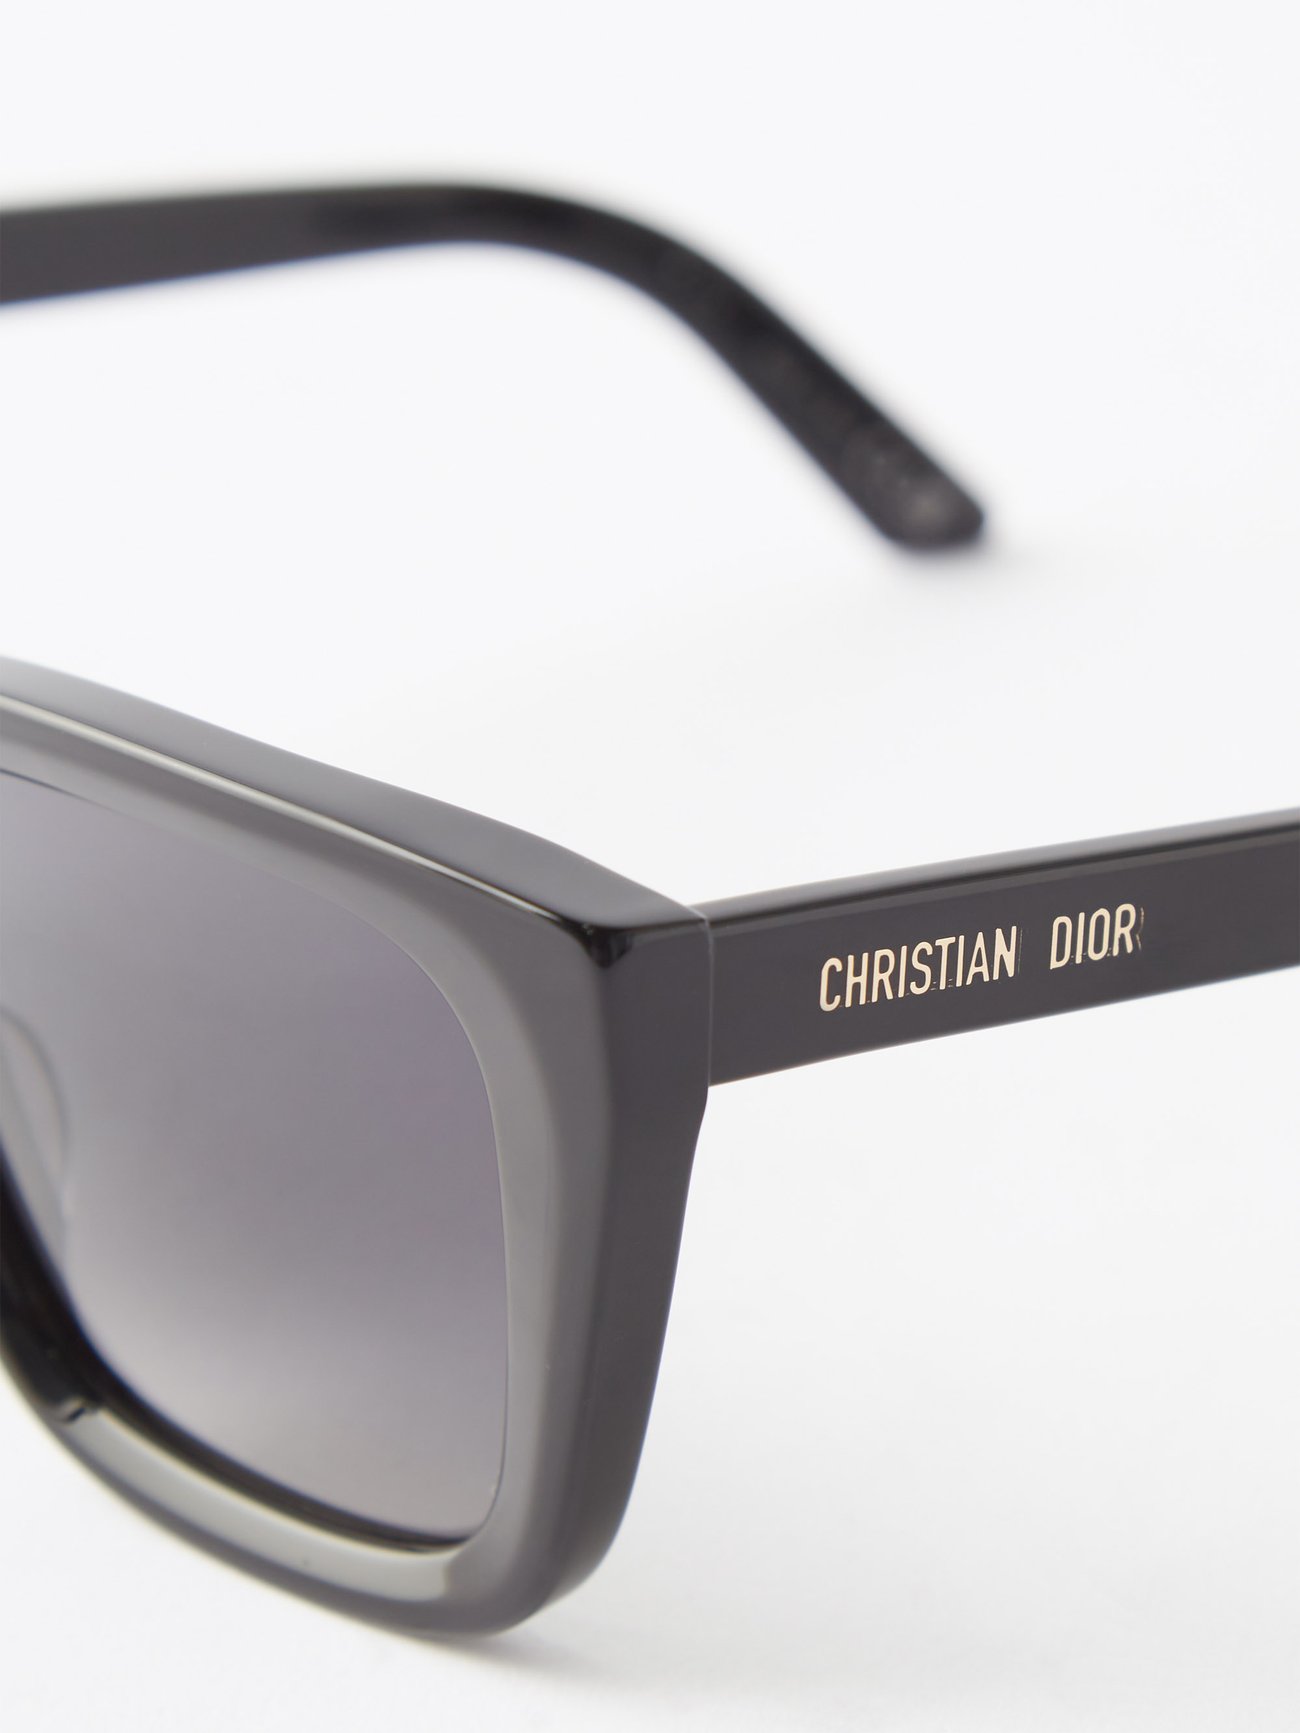 DiorPacific S1U Black Rectangular Sunglasses | DIOR | Dior sunglasses,  Sunglasses, Dior